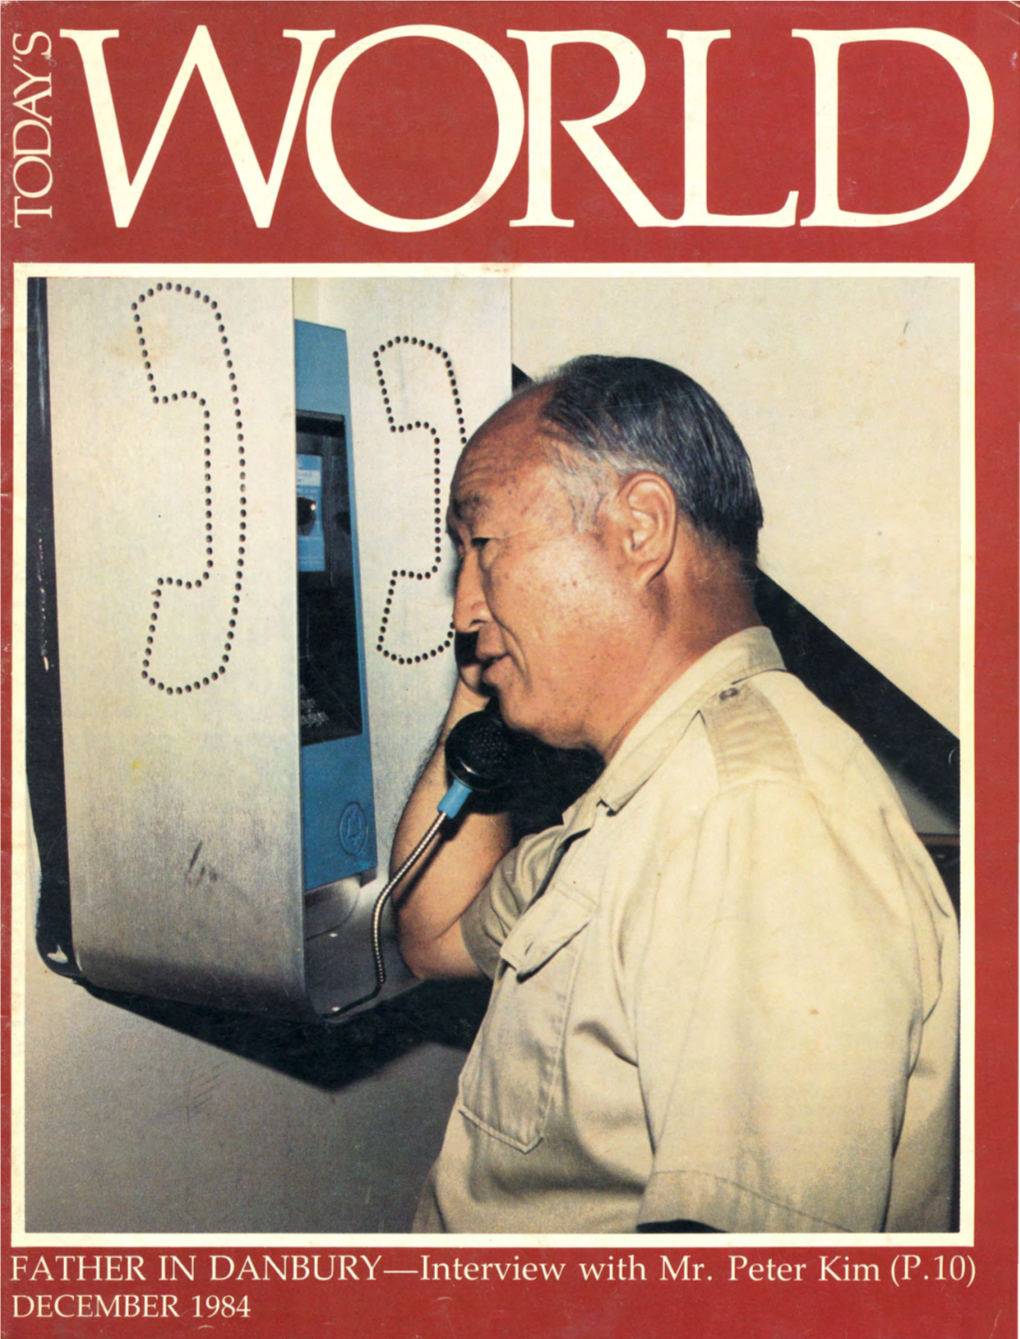 Today's World Magazine for December 1984